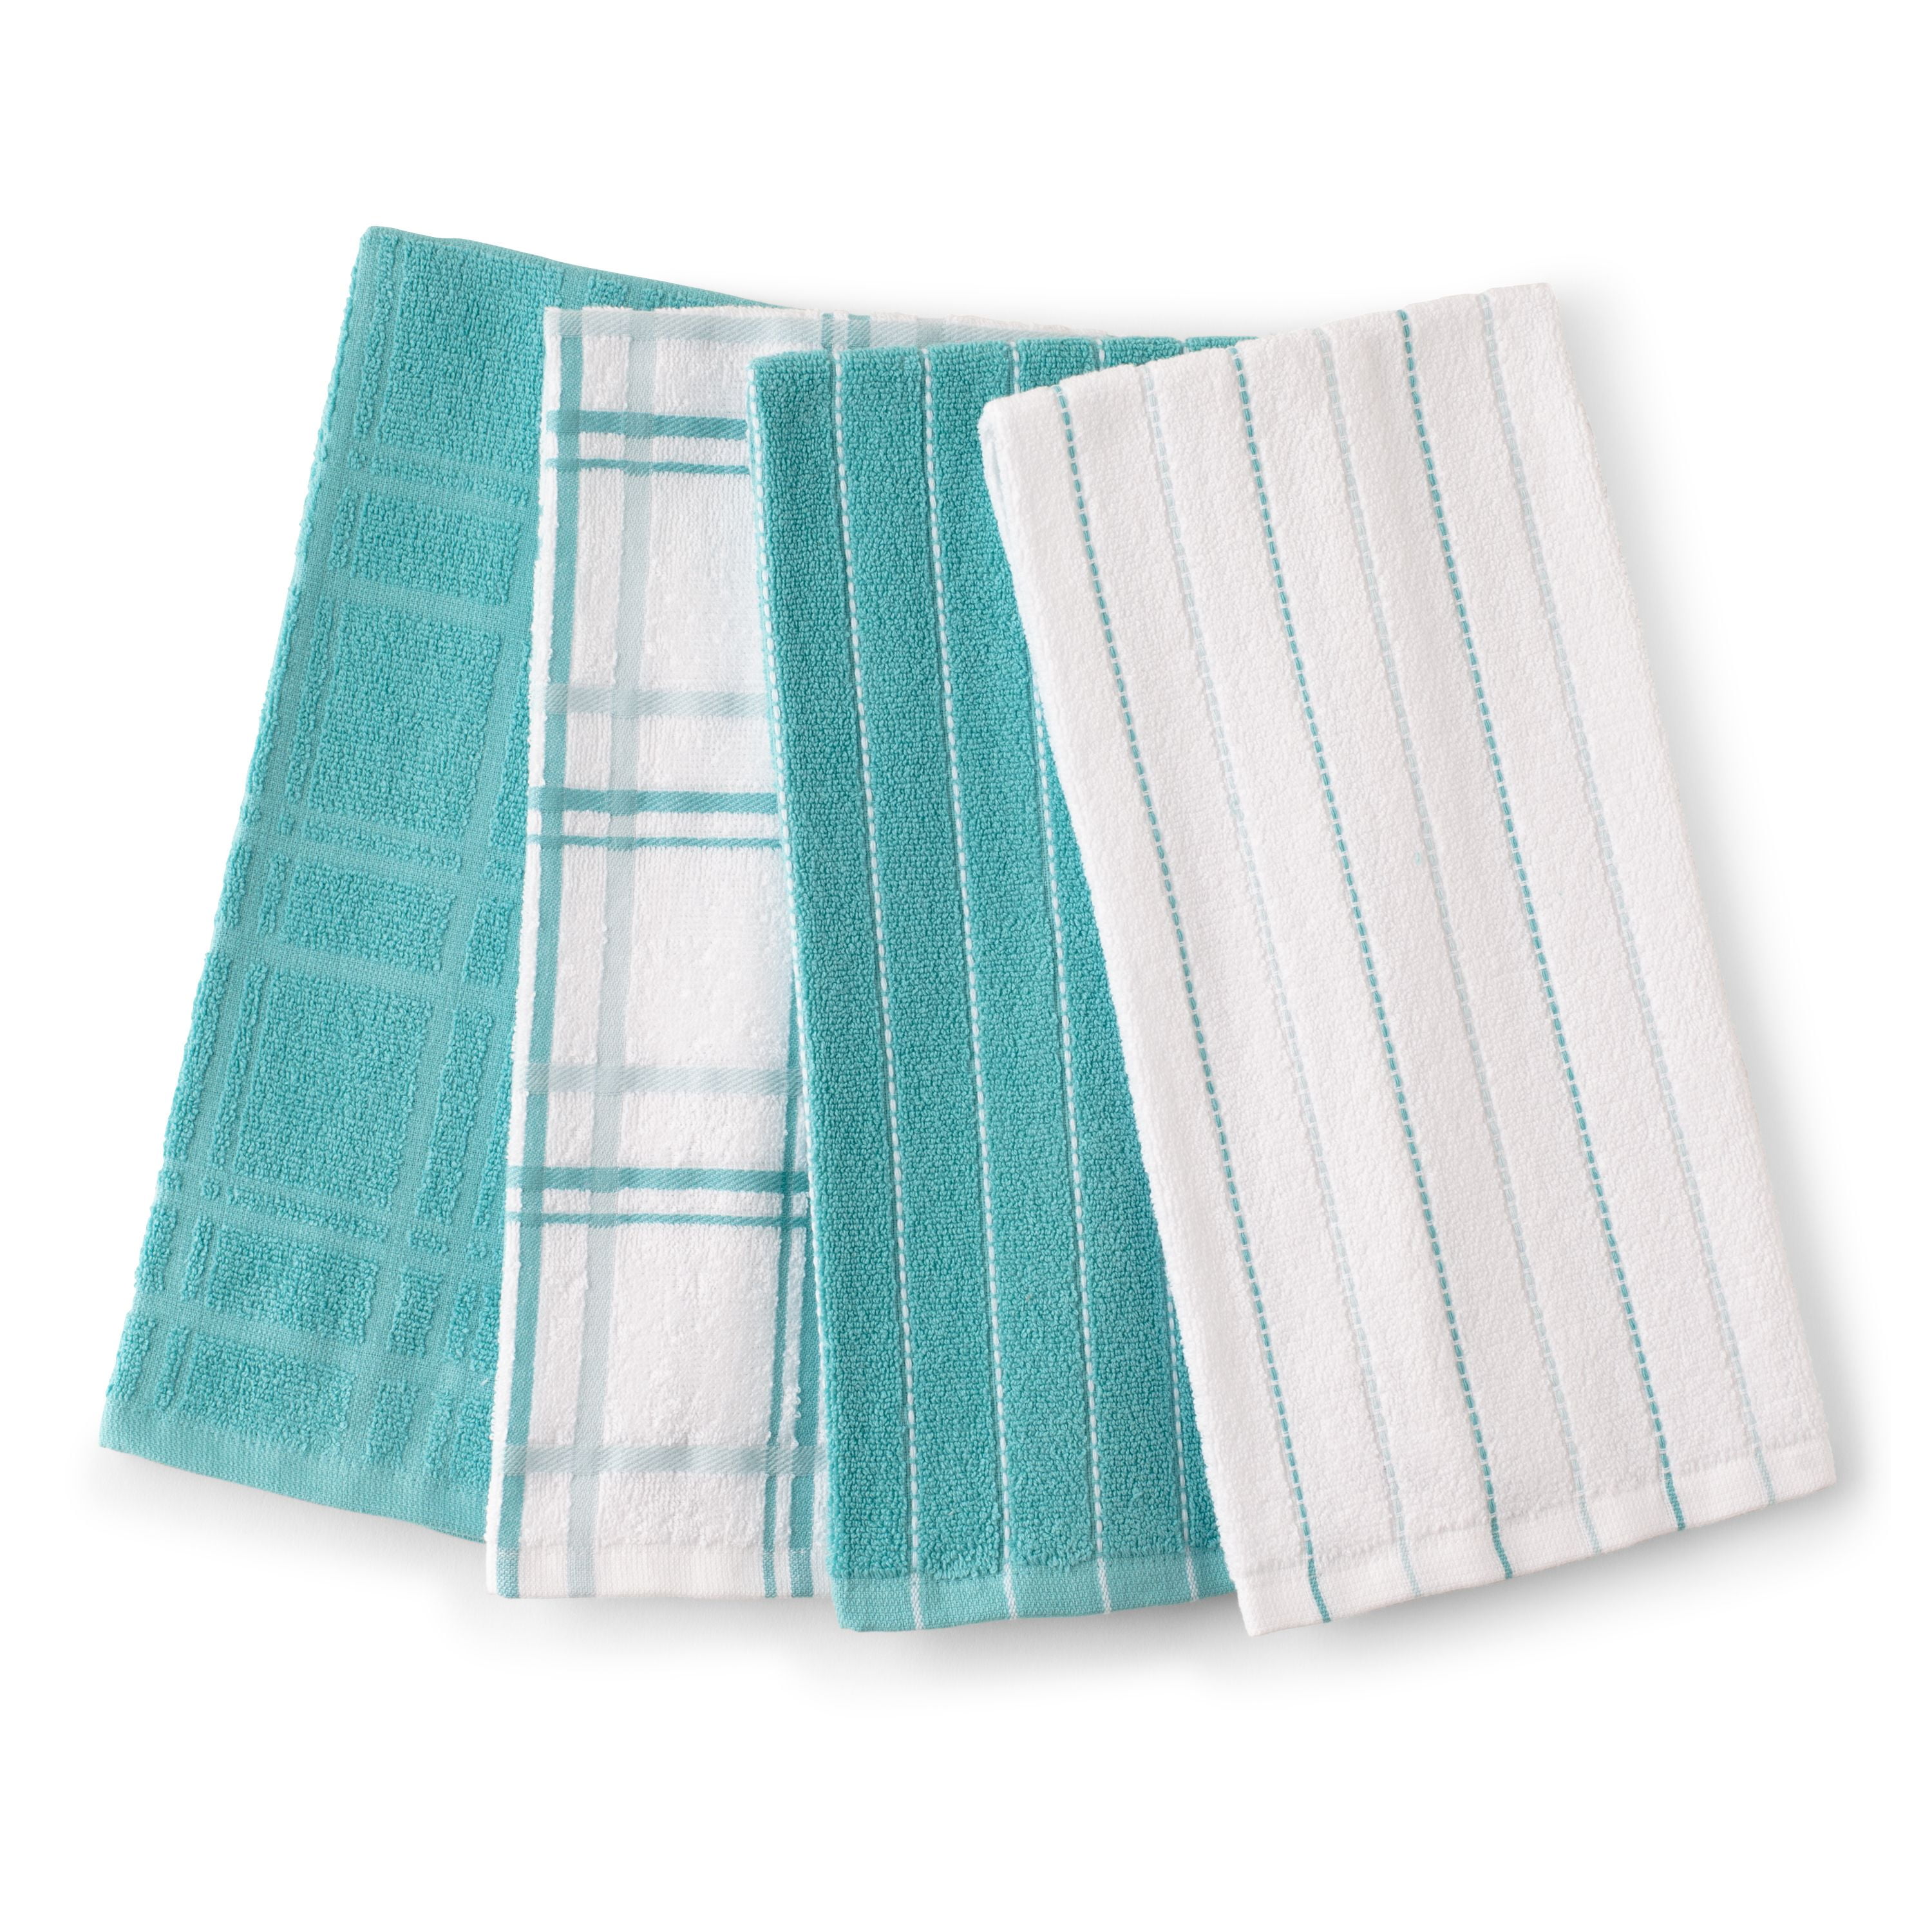 NEW Handmade 100% COTTON KITCHEN DISH CLOTH TOWELS SET of 2 Two 32" X 20" VEGGIE 